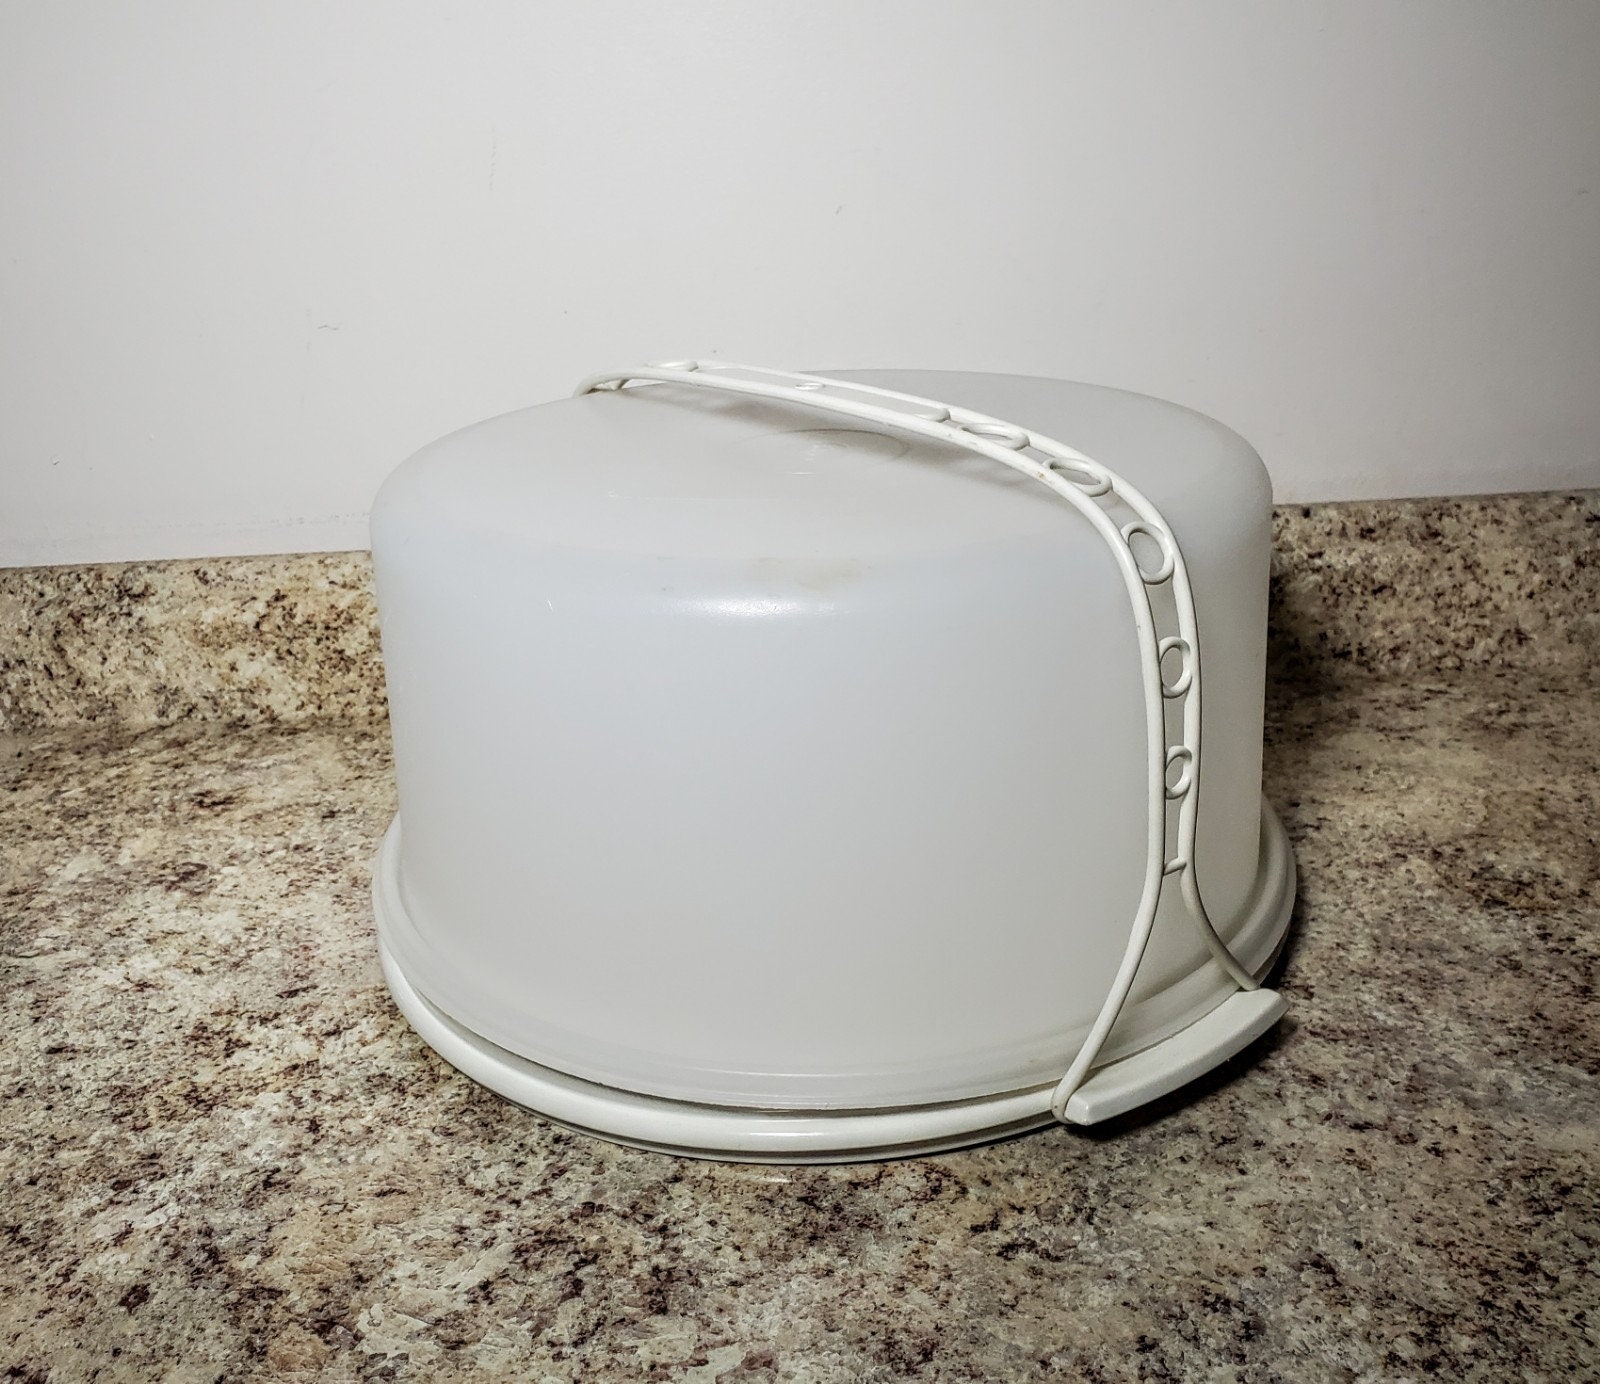 Vintage Tupperware Rectangular Cake Carrier Lid White 9x13 No Handle 622-1  623-1